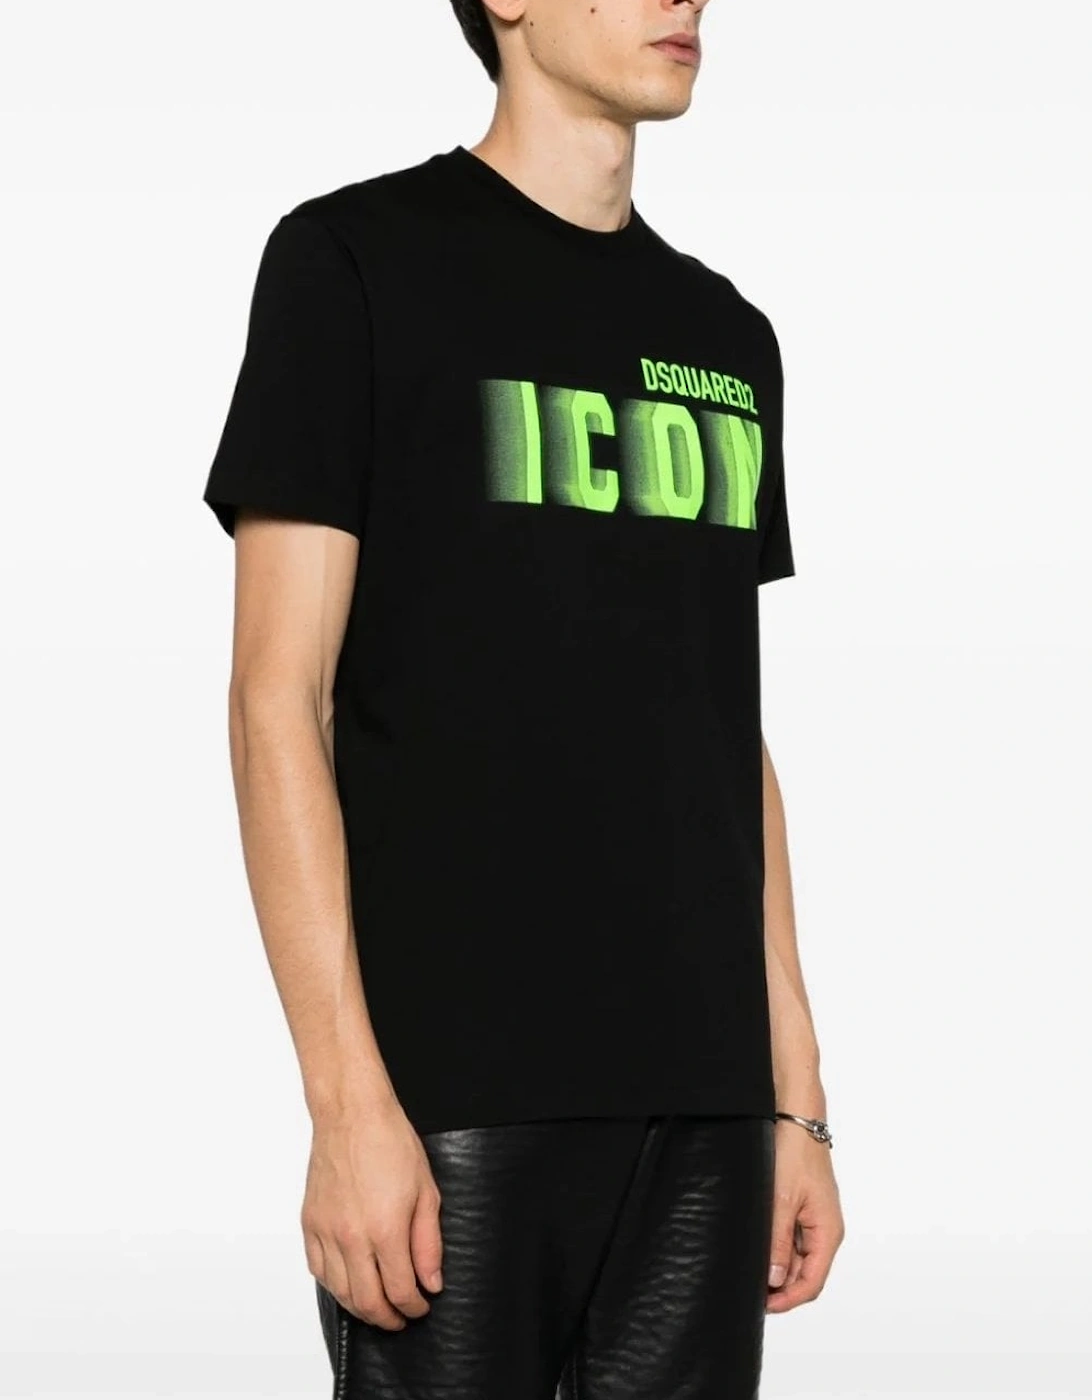 Icon Blur Cool Fit T-shirt Black